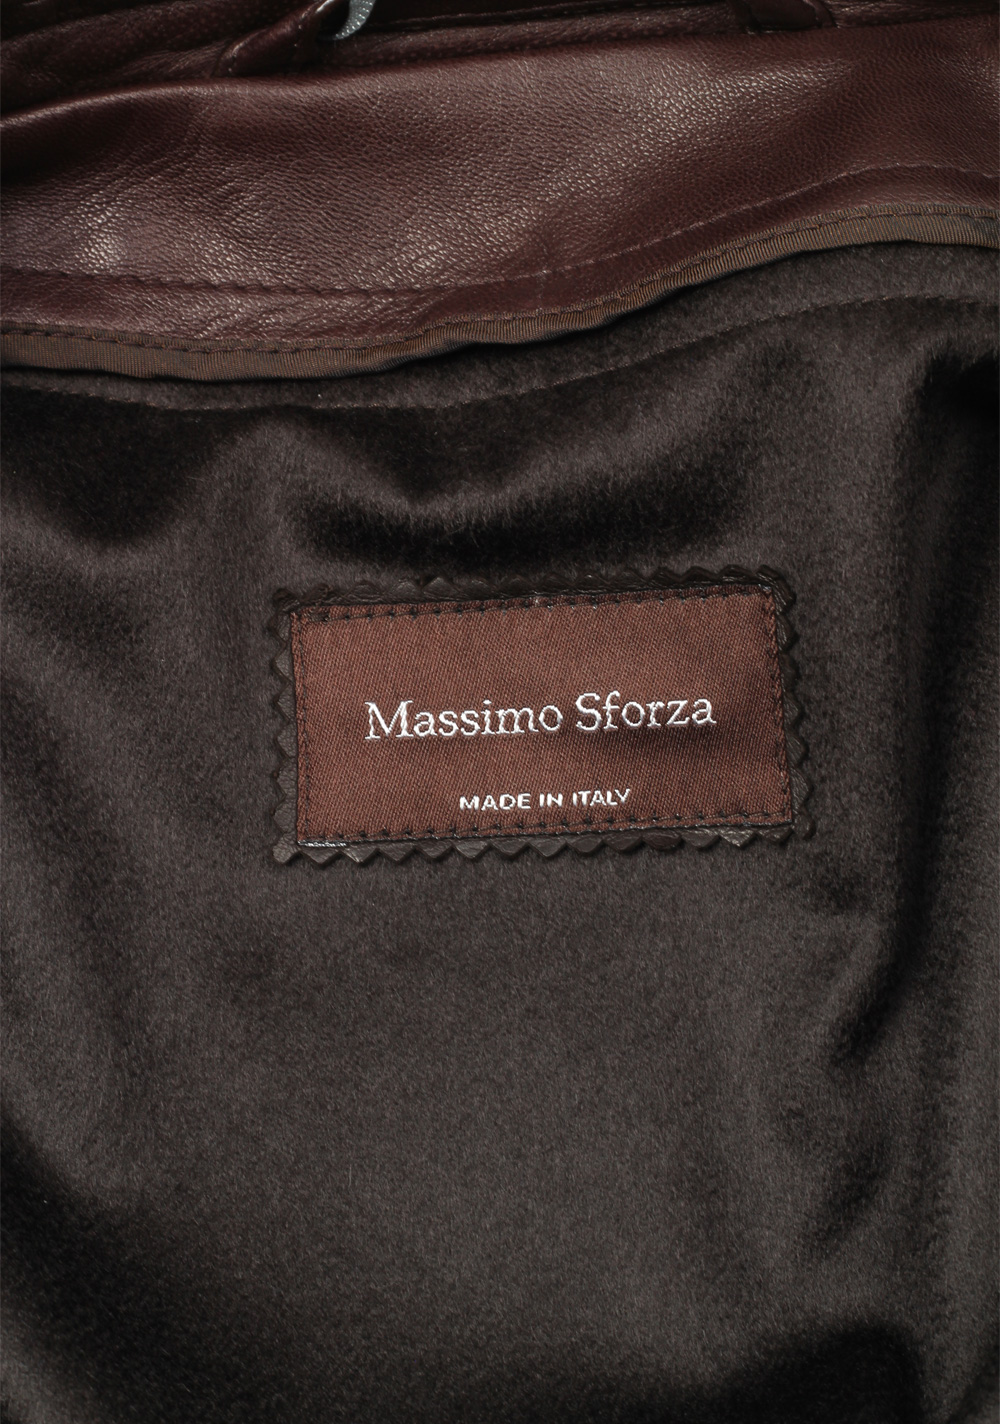 Massimo Sforza Brown Leather Coat Jacket Size 56 / 46R U.S. | Costume ...